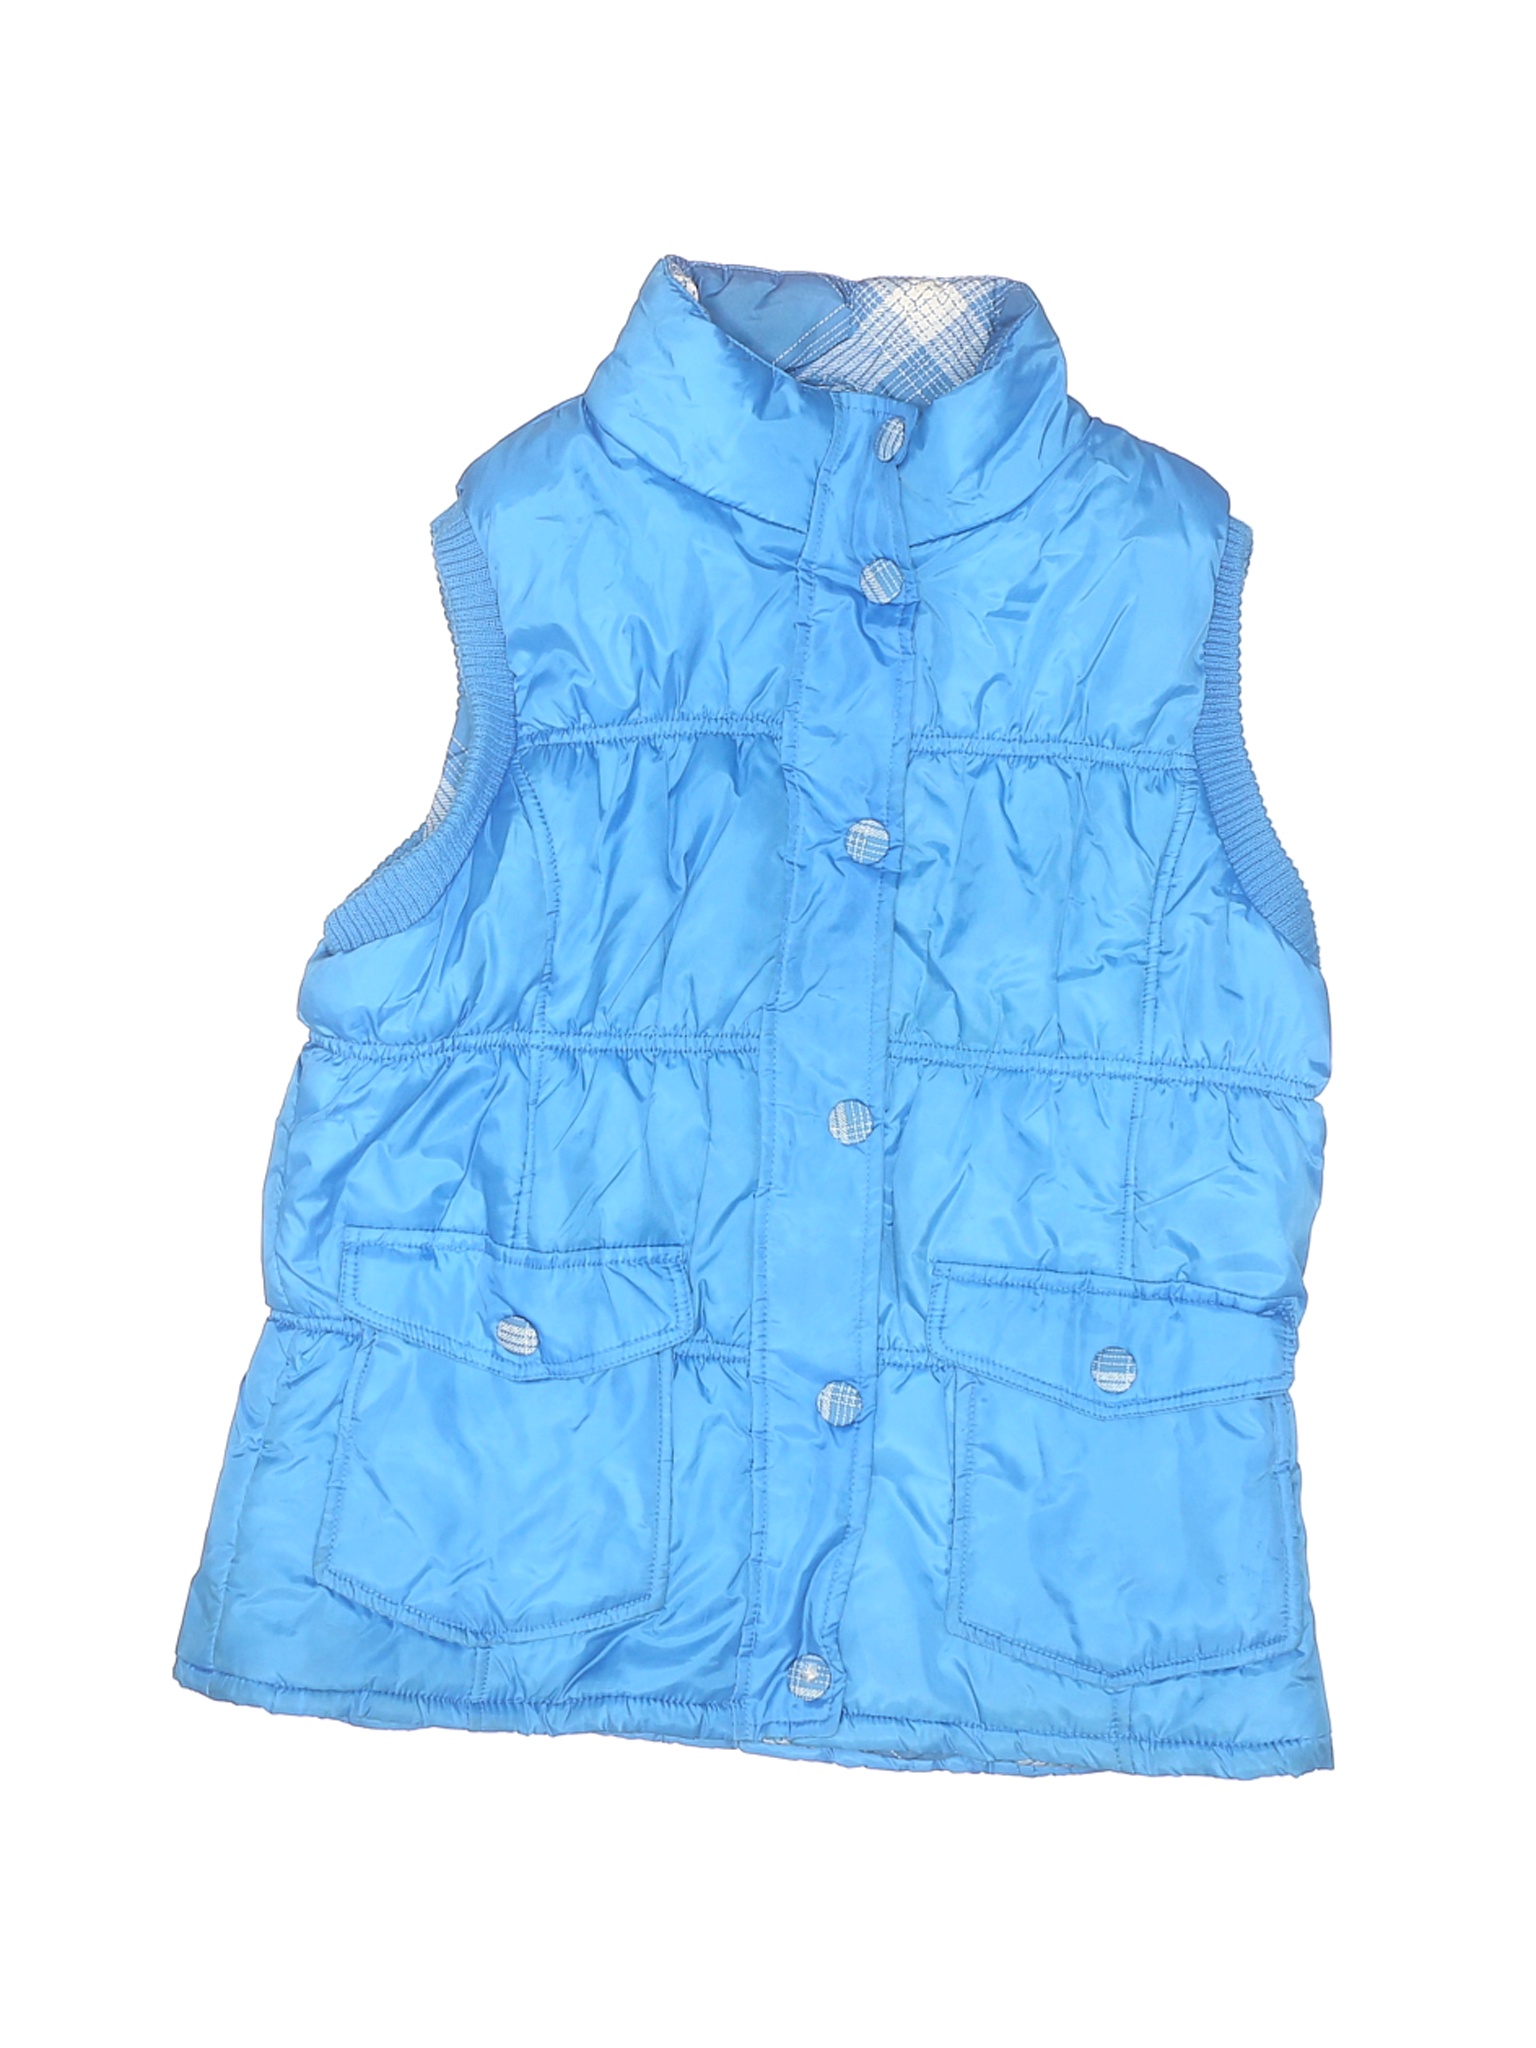 Weatherproof Girls Blue Vest 14 | eBay